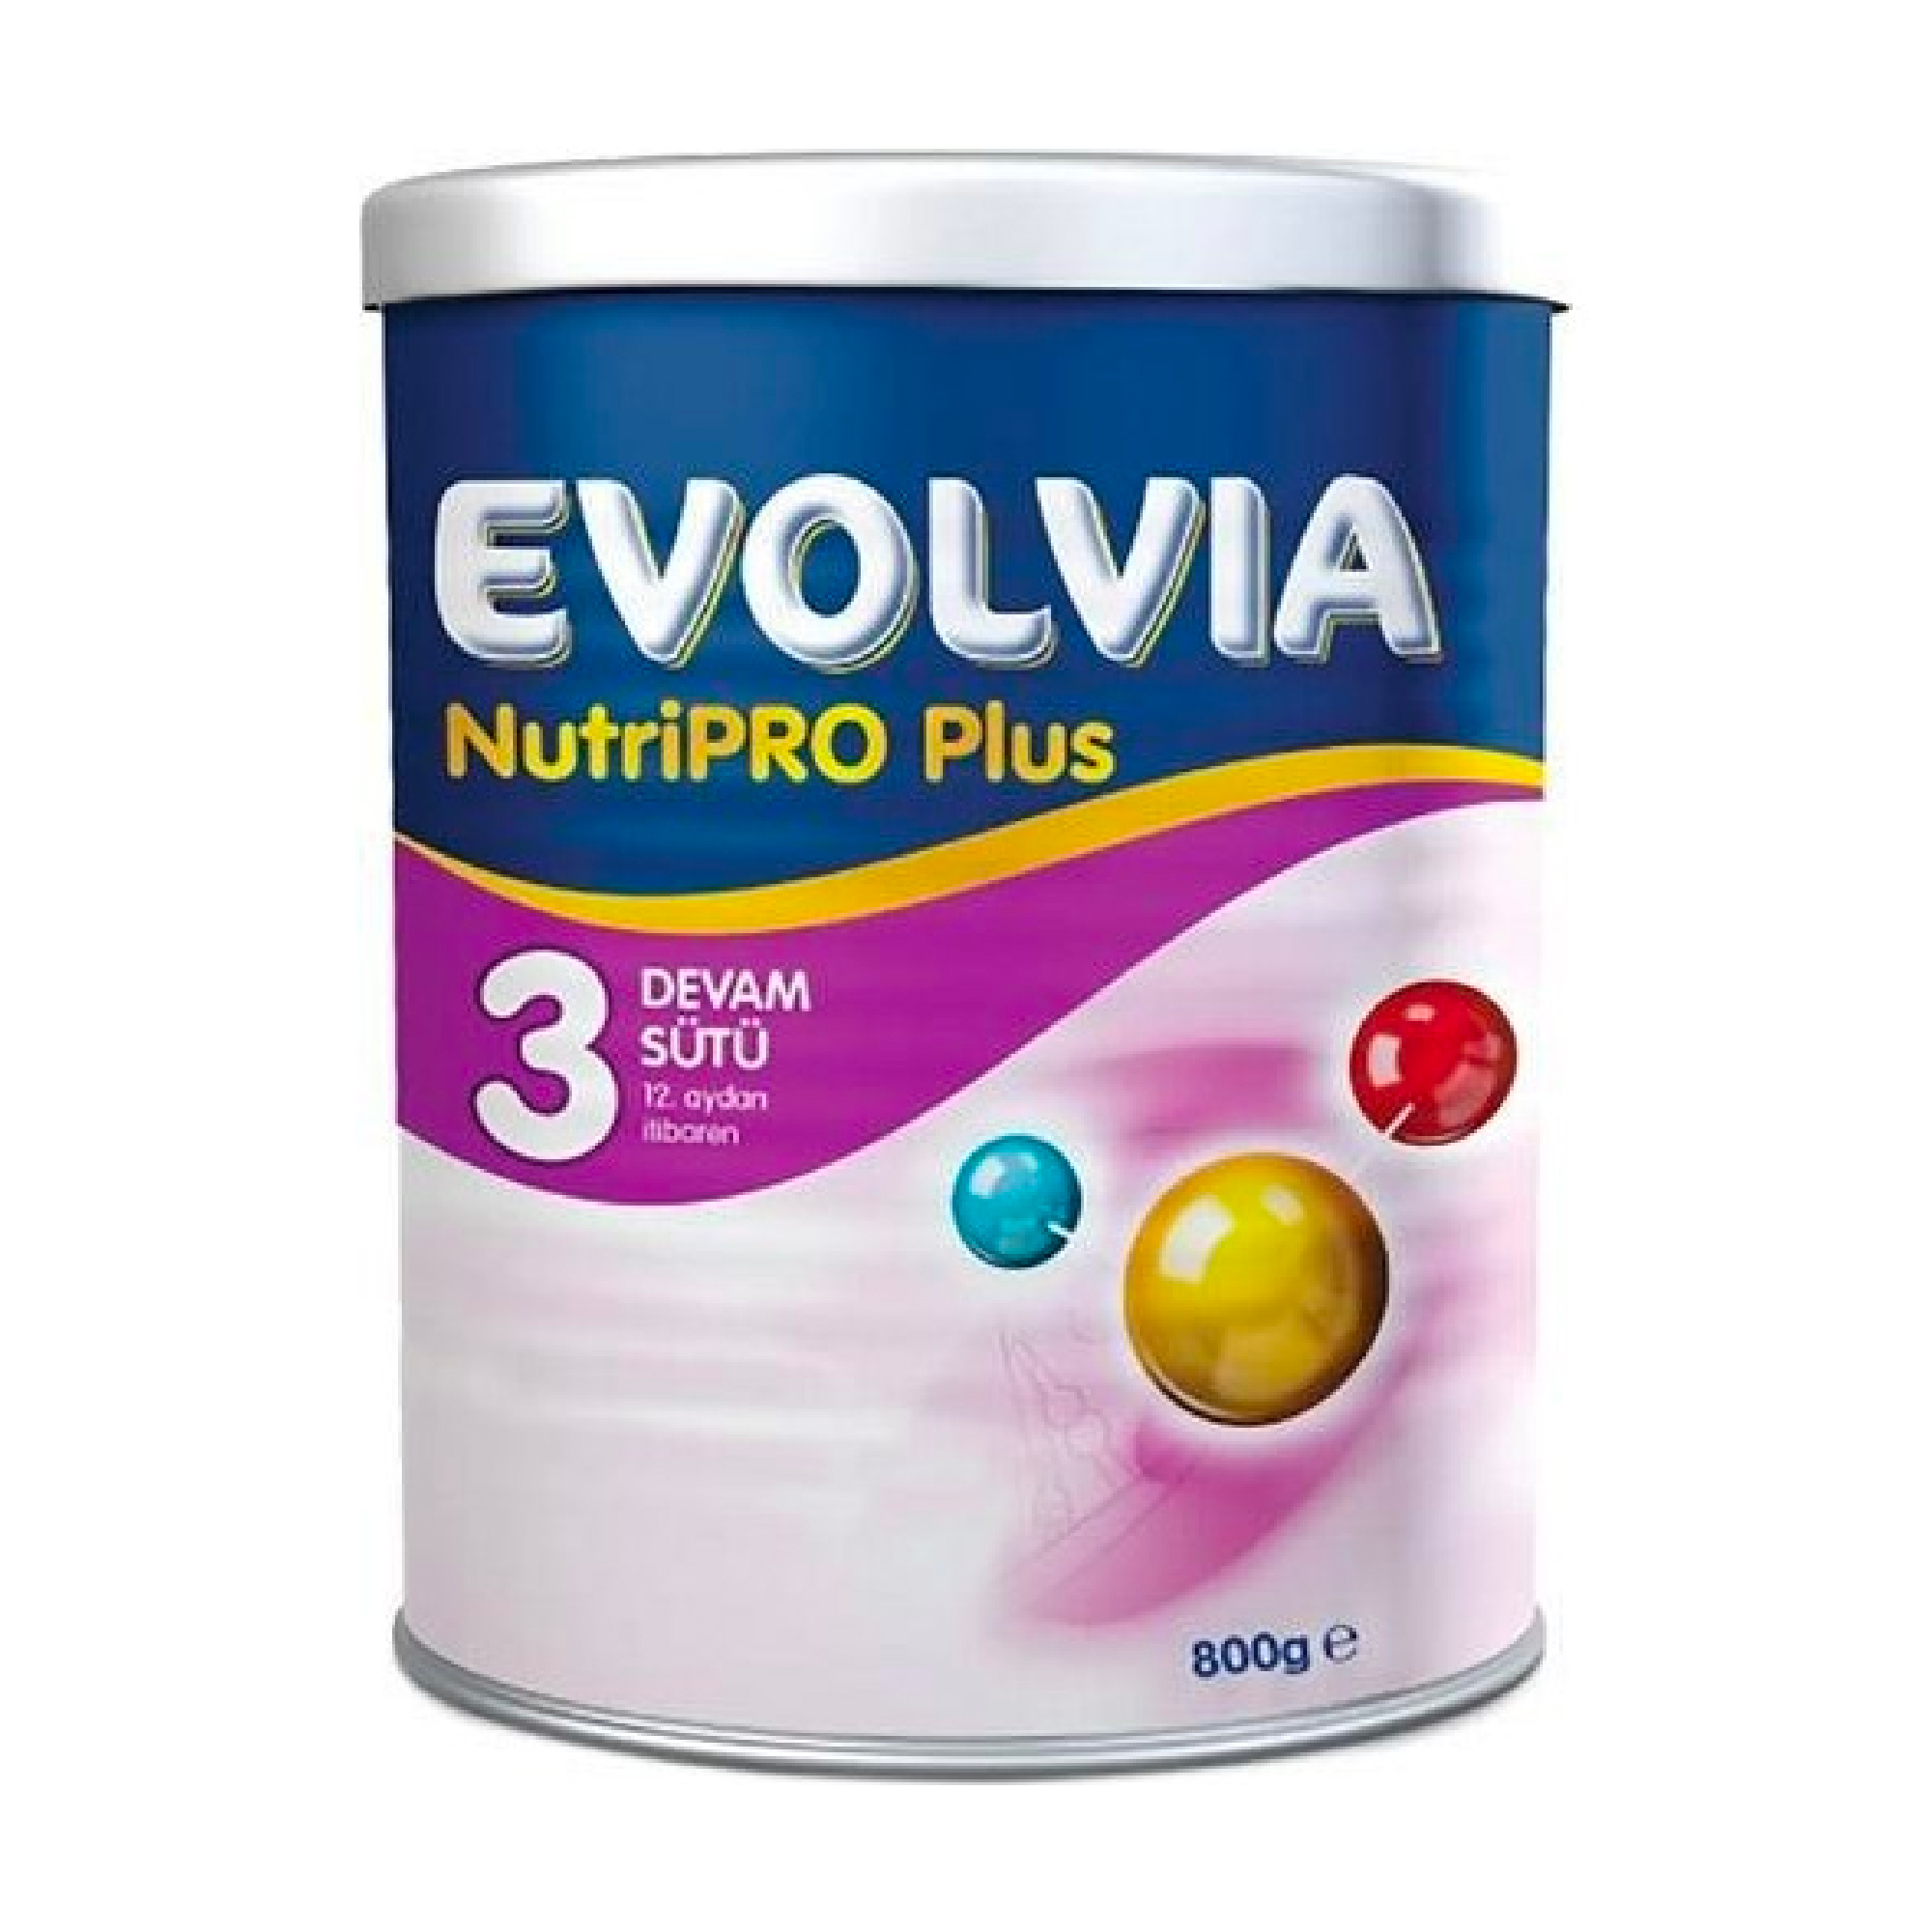 Evolvia NutriPRO Plus 3 Devam Sütü 800 gr